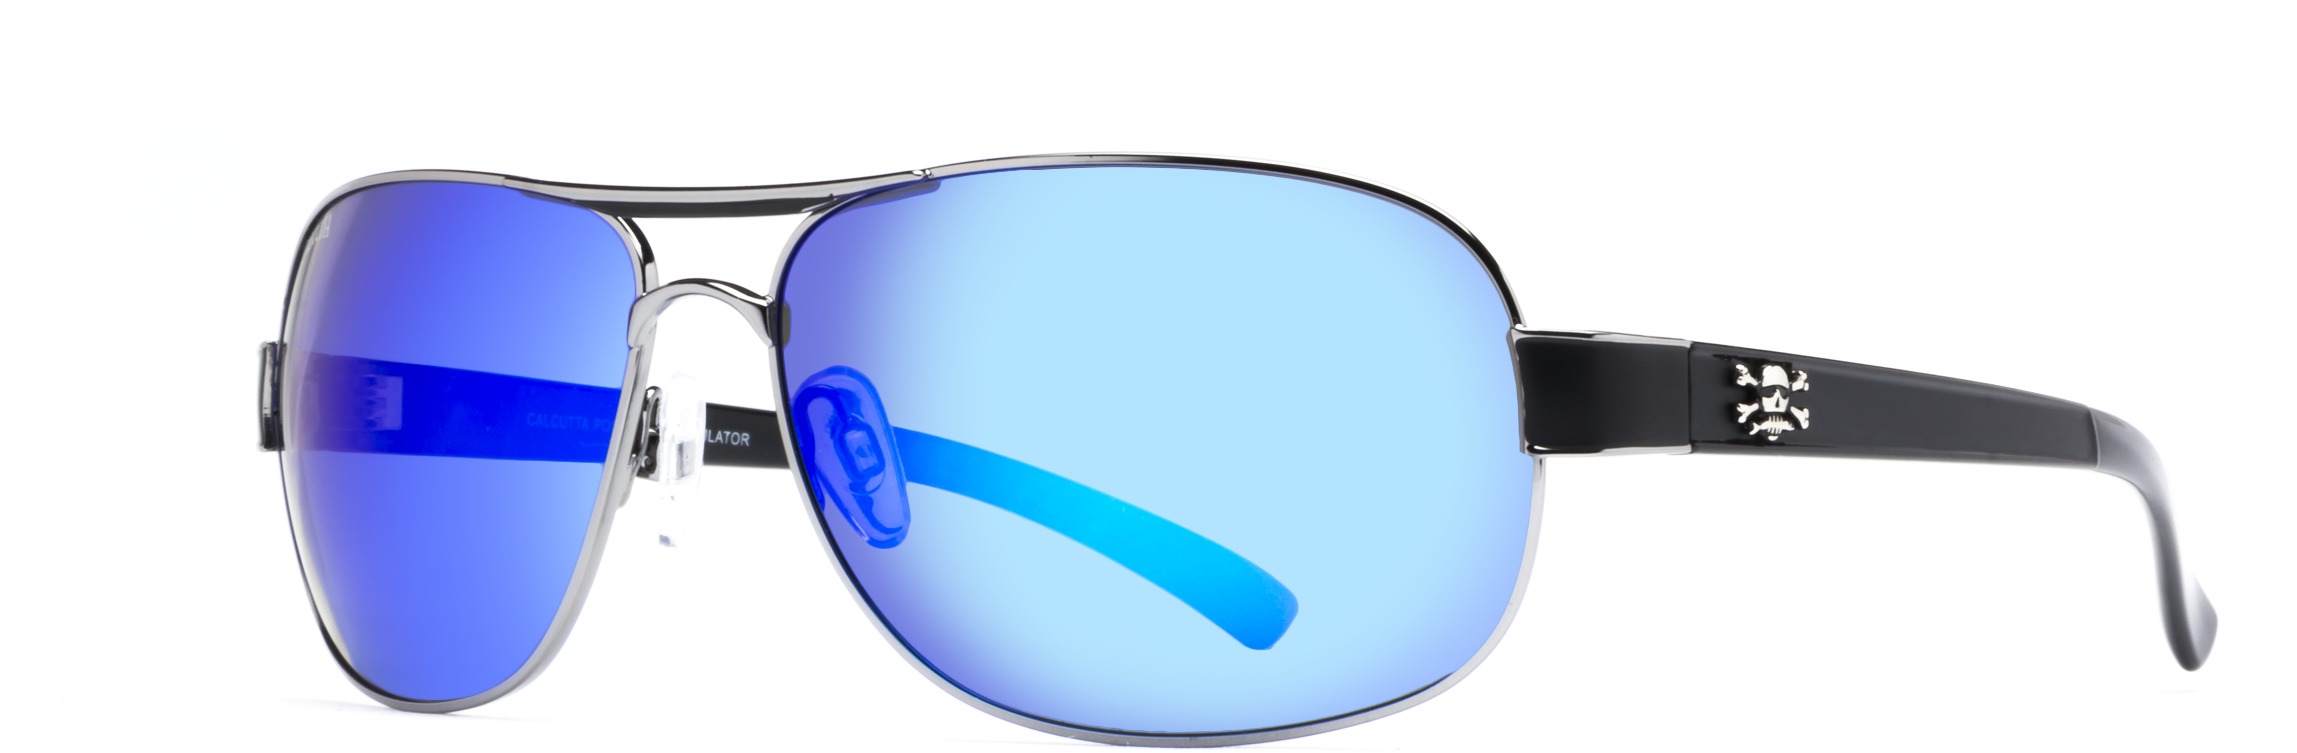 Calcutta RG1BM Regulator Sunglasses Black Wire Frame Blue Mirror Lens